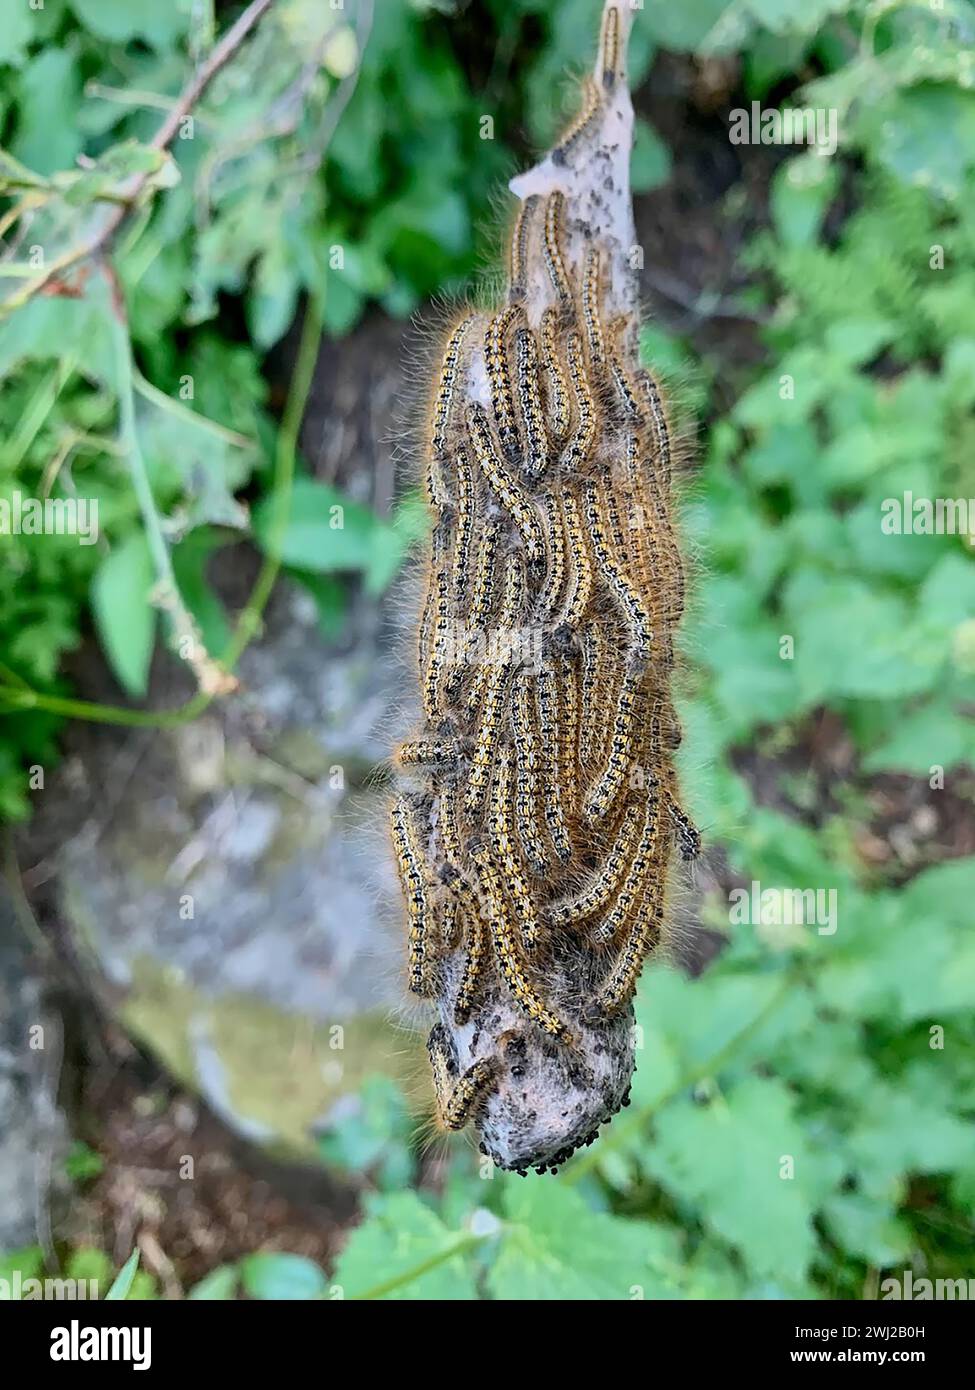 Caterpillar Infestation Swarming on Leaf Stock Photo